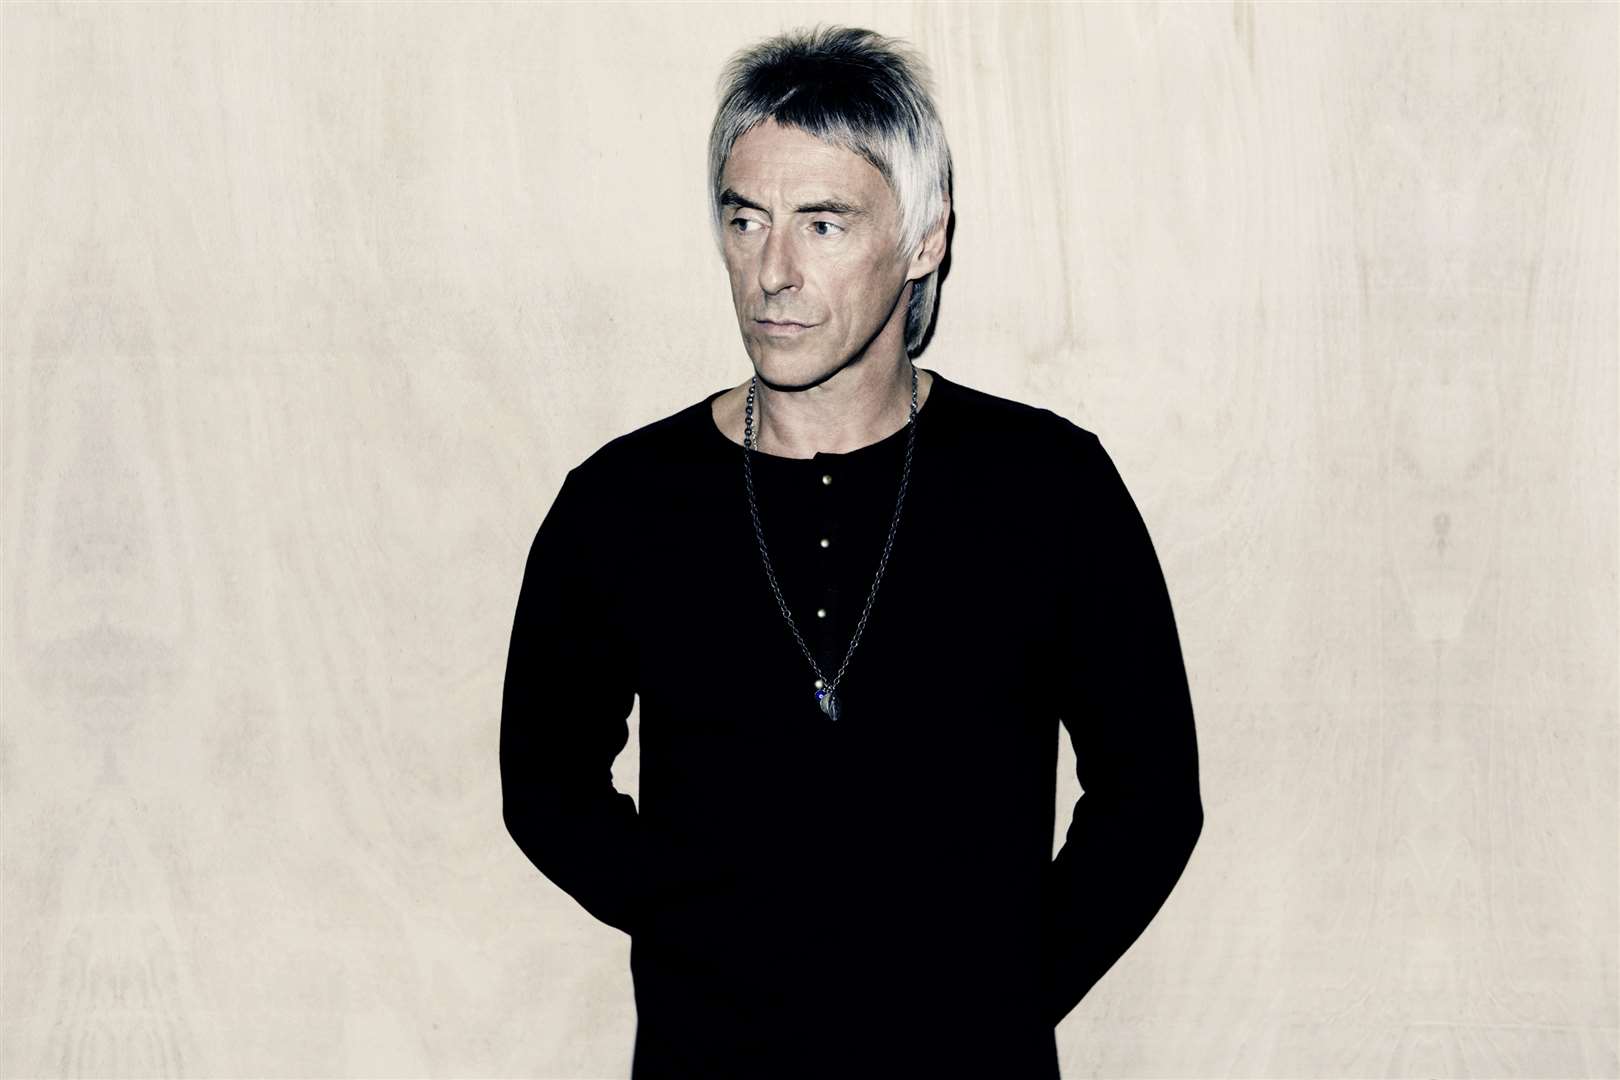 "The Modfather" Paul Weller